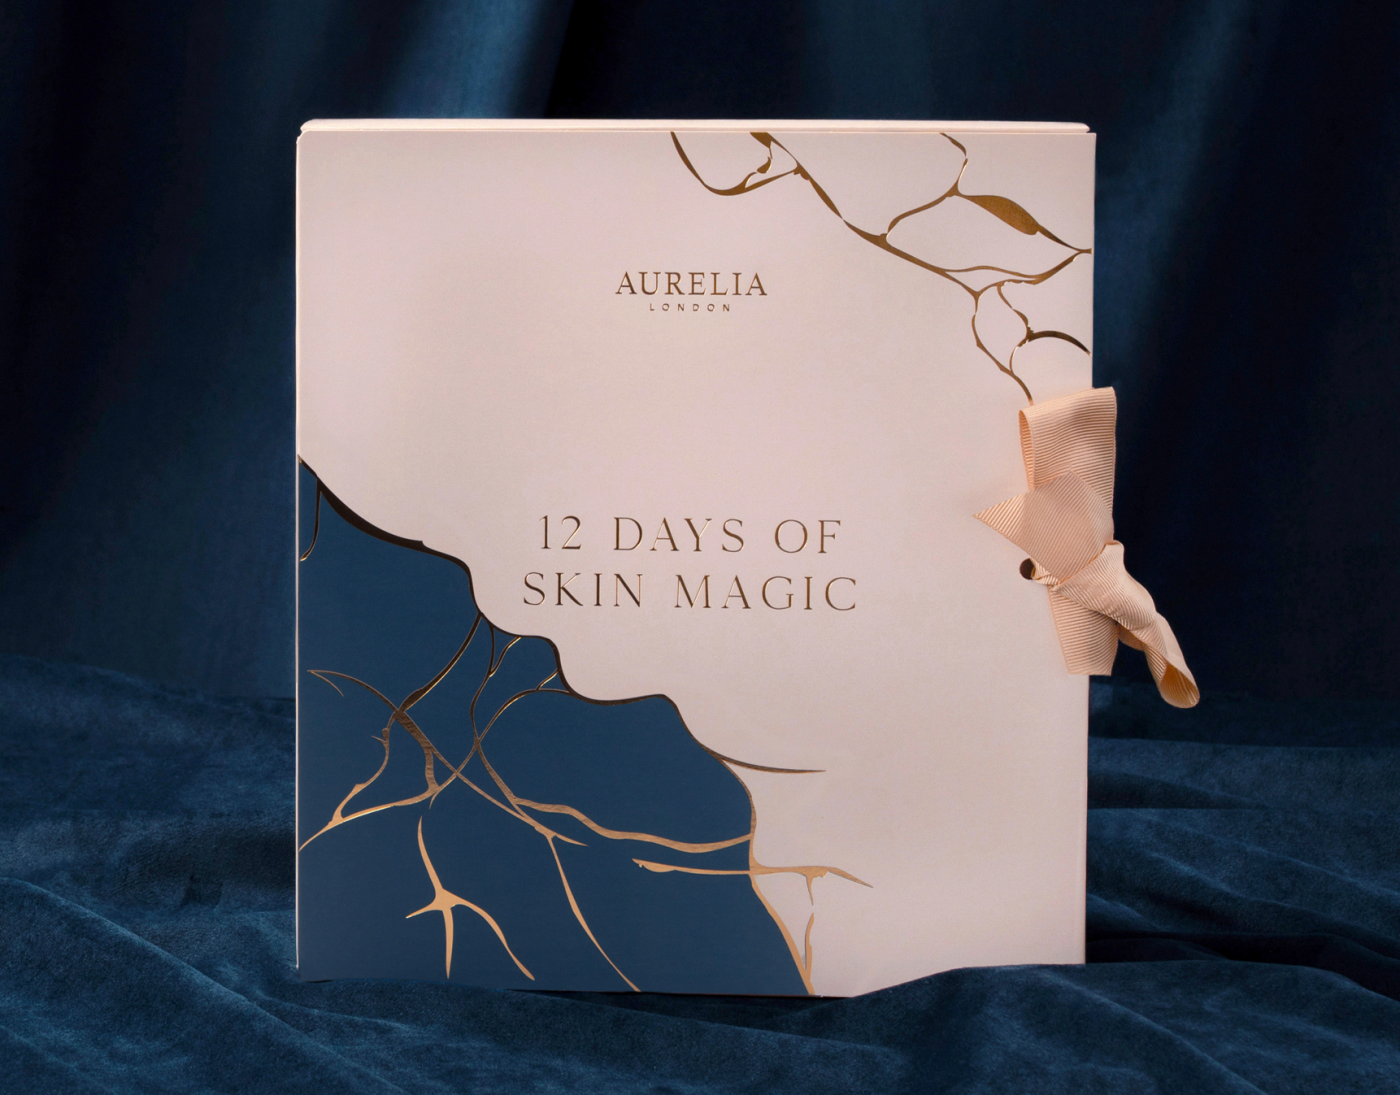 Aurelia London Advent Calendar